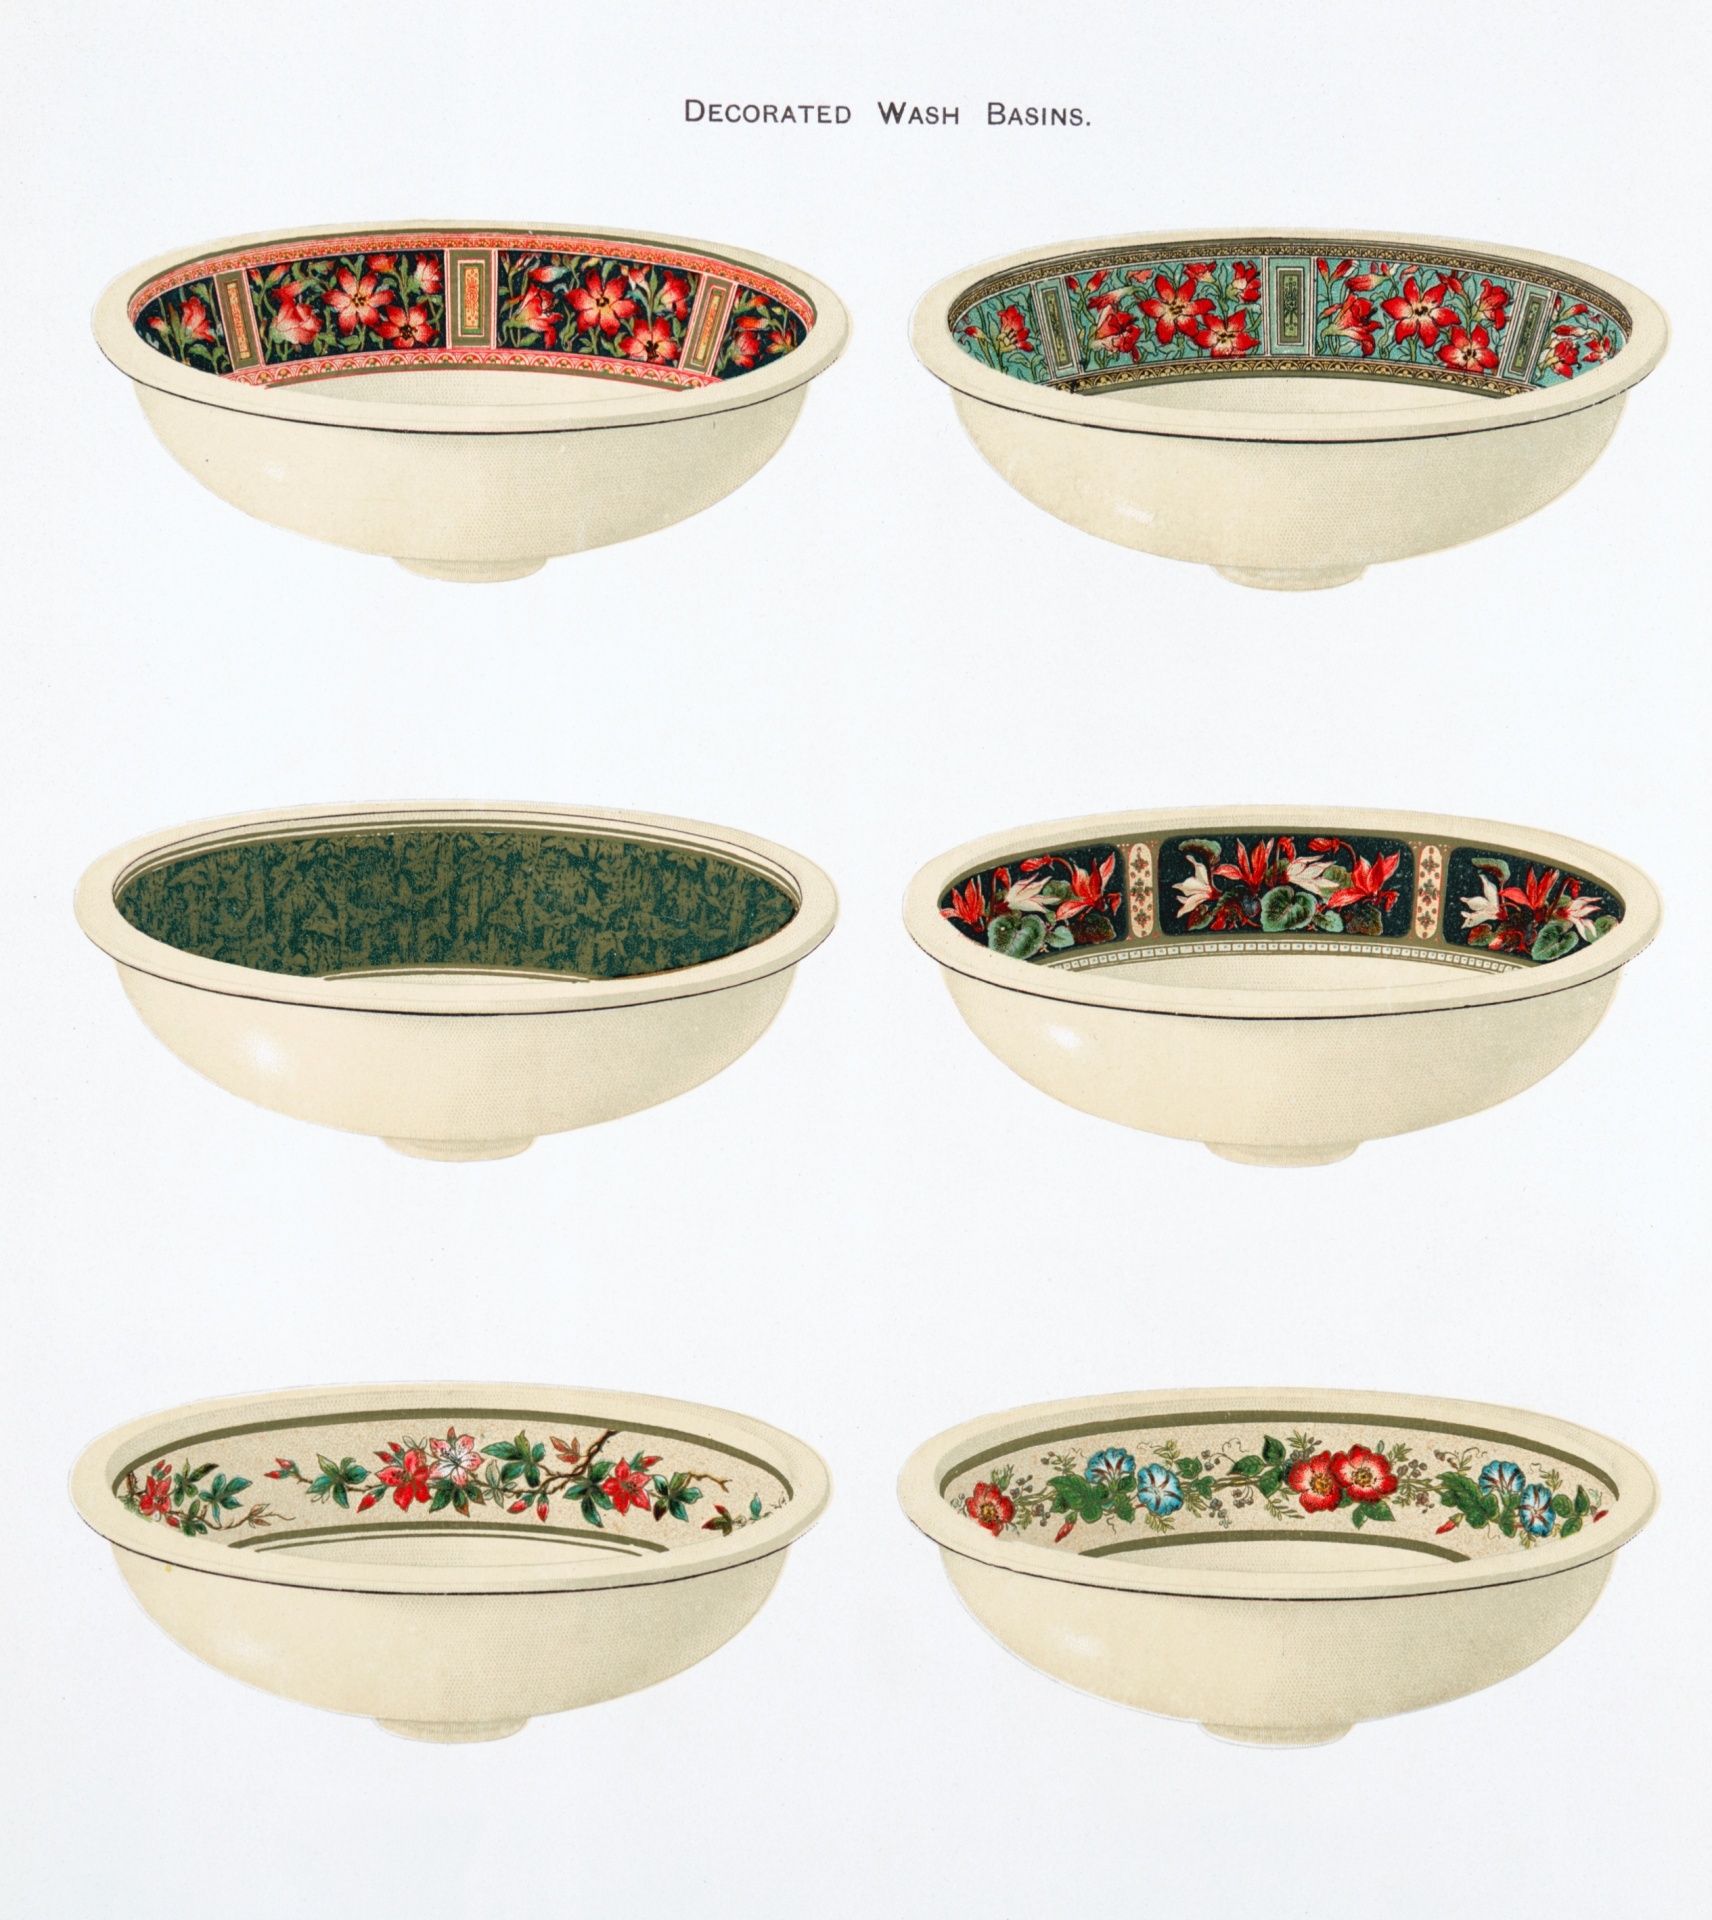 Washing Bowl Wash Basin Vintage Ceramic Advertising Illustration Old Antique Hand Painted Art